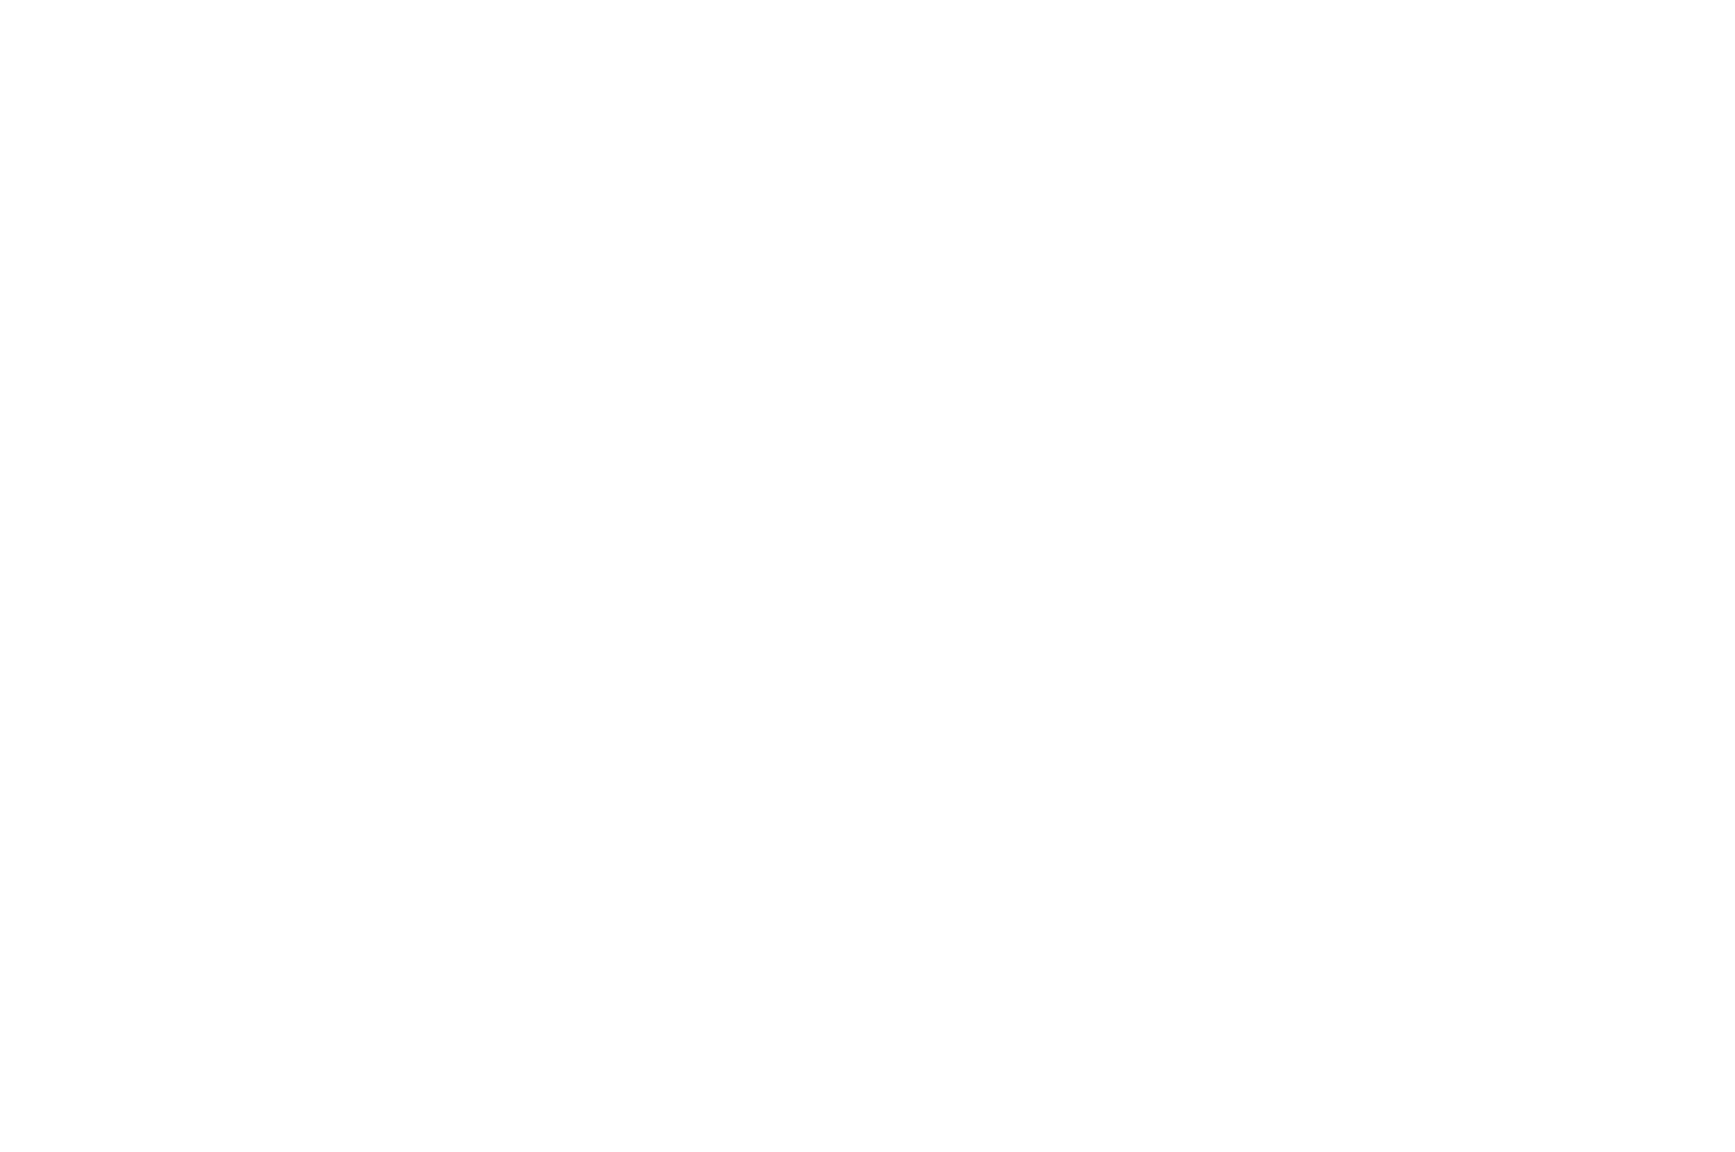 OFFICIAL SELECTION - 22nd Oakland International Film Festival - 2023